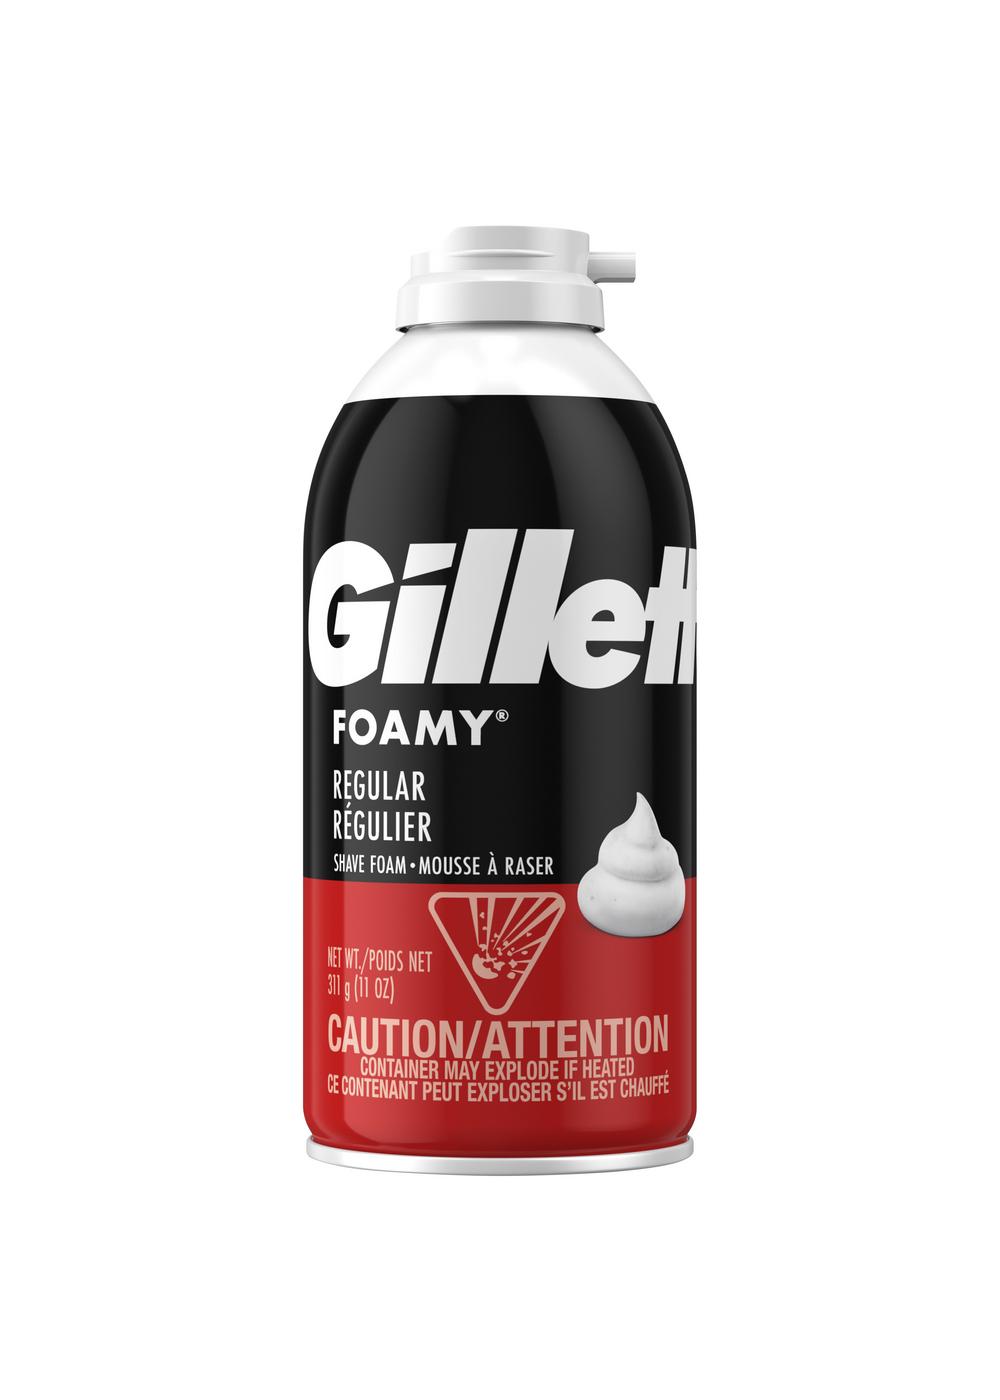 Gillette Foamy Shave Foam - Regular; image 1 of 10